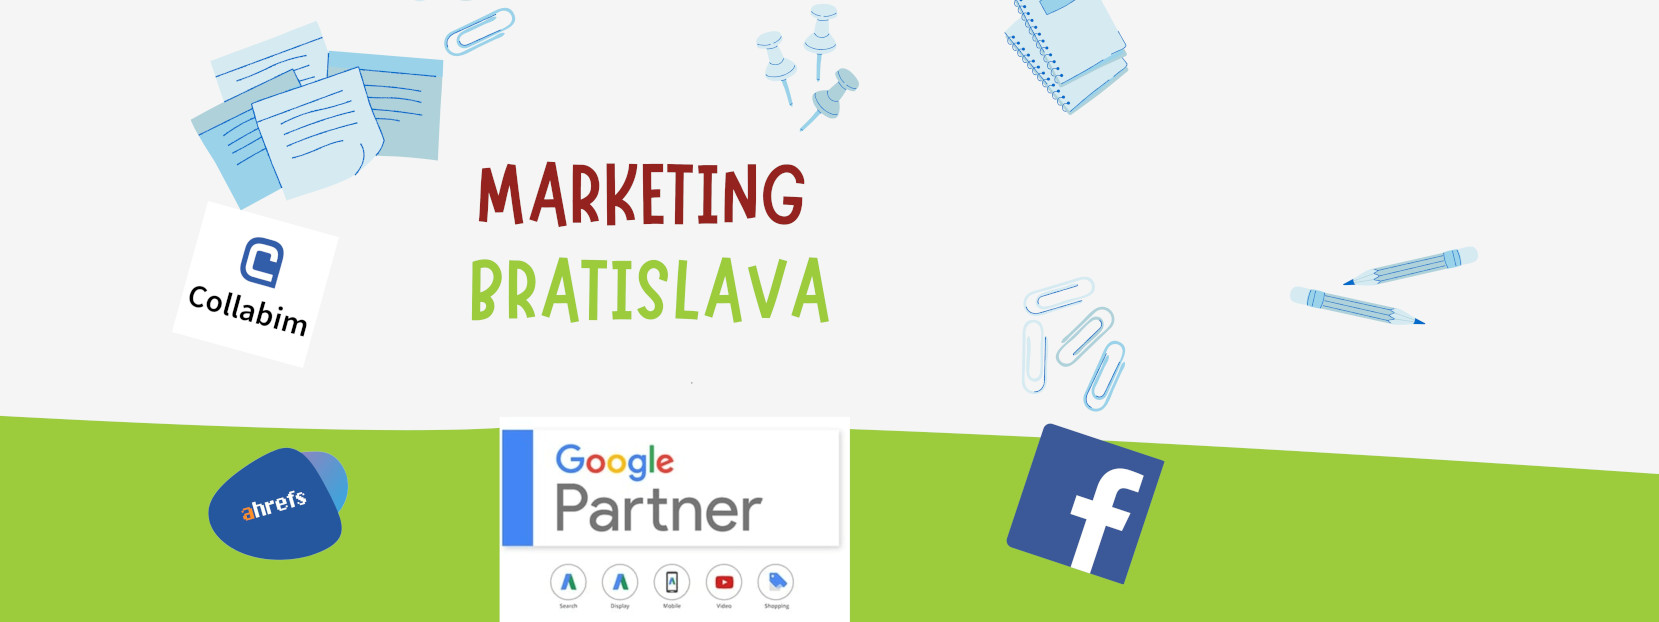 Marketing Bratislava